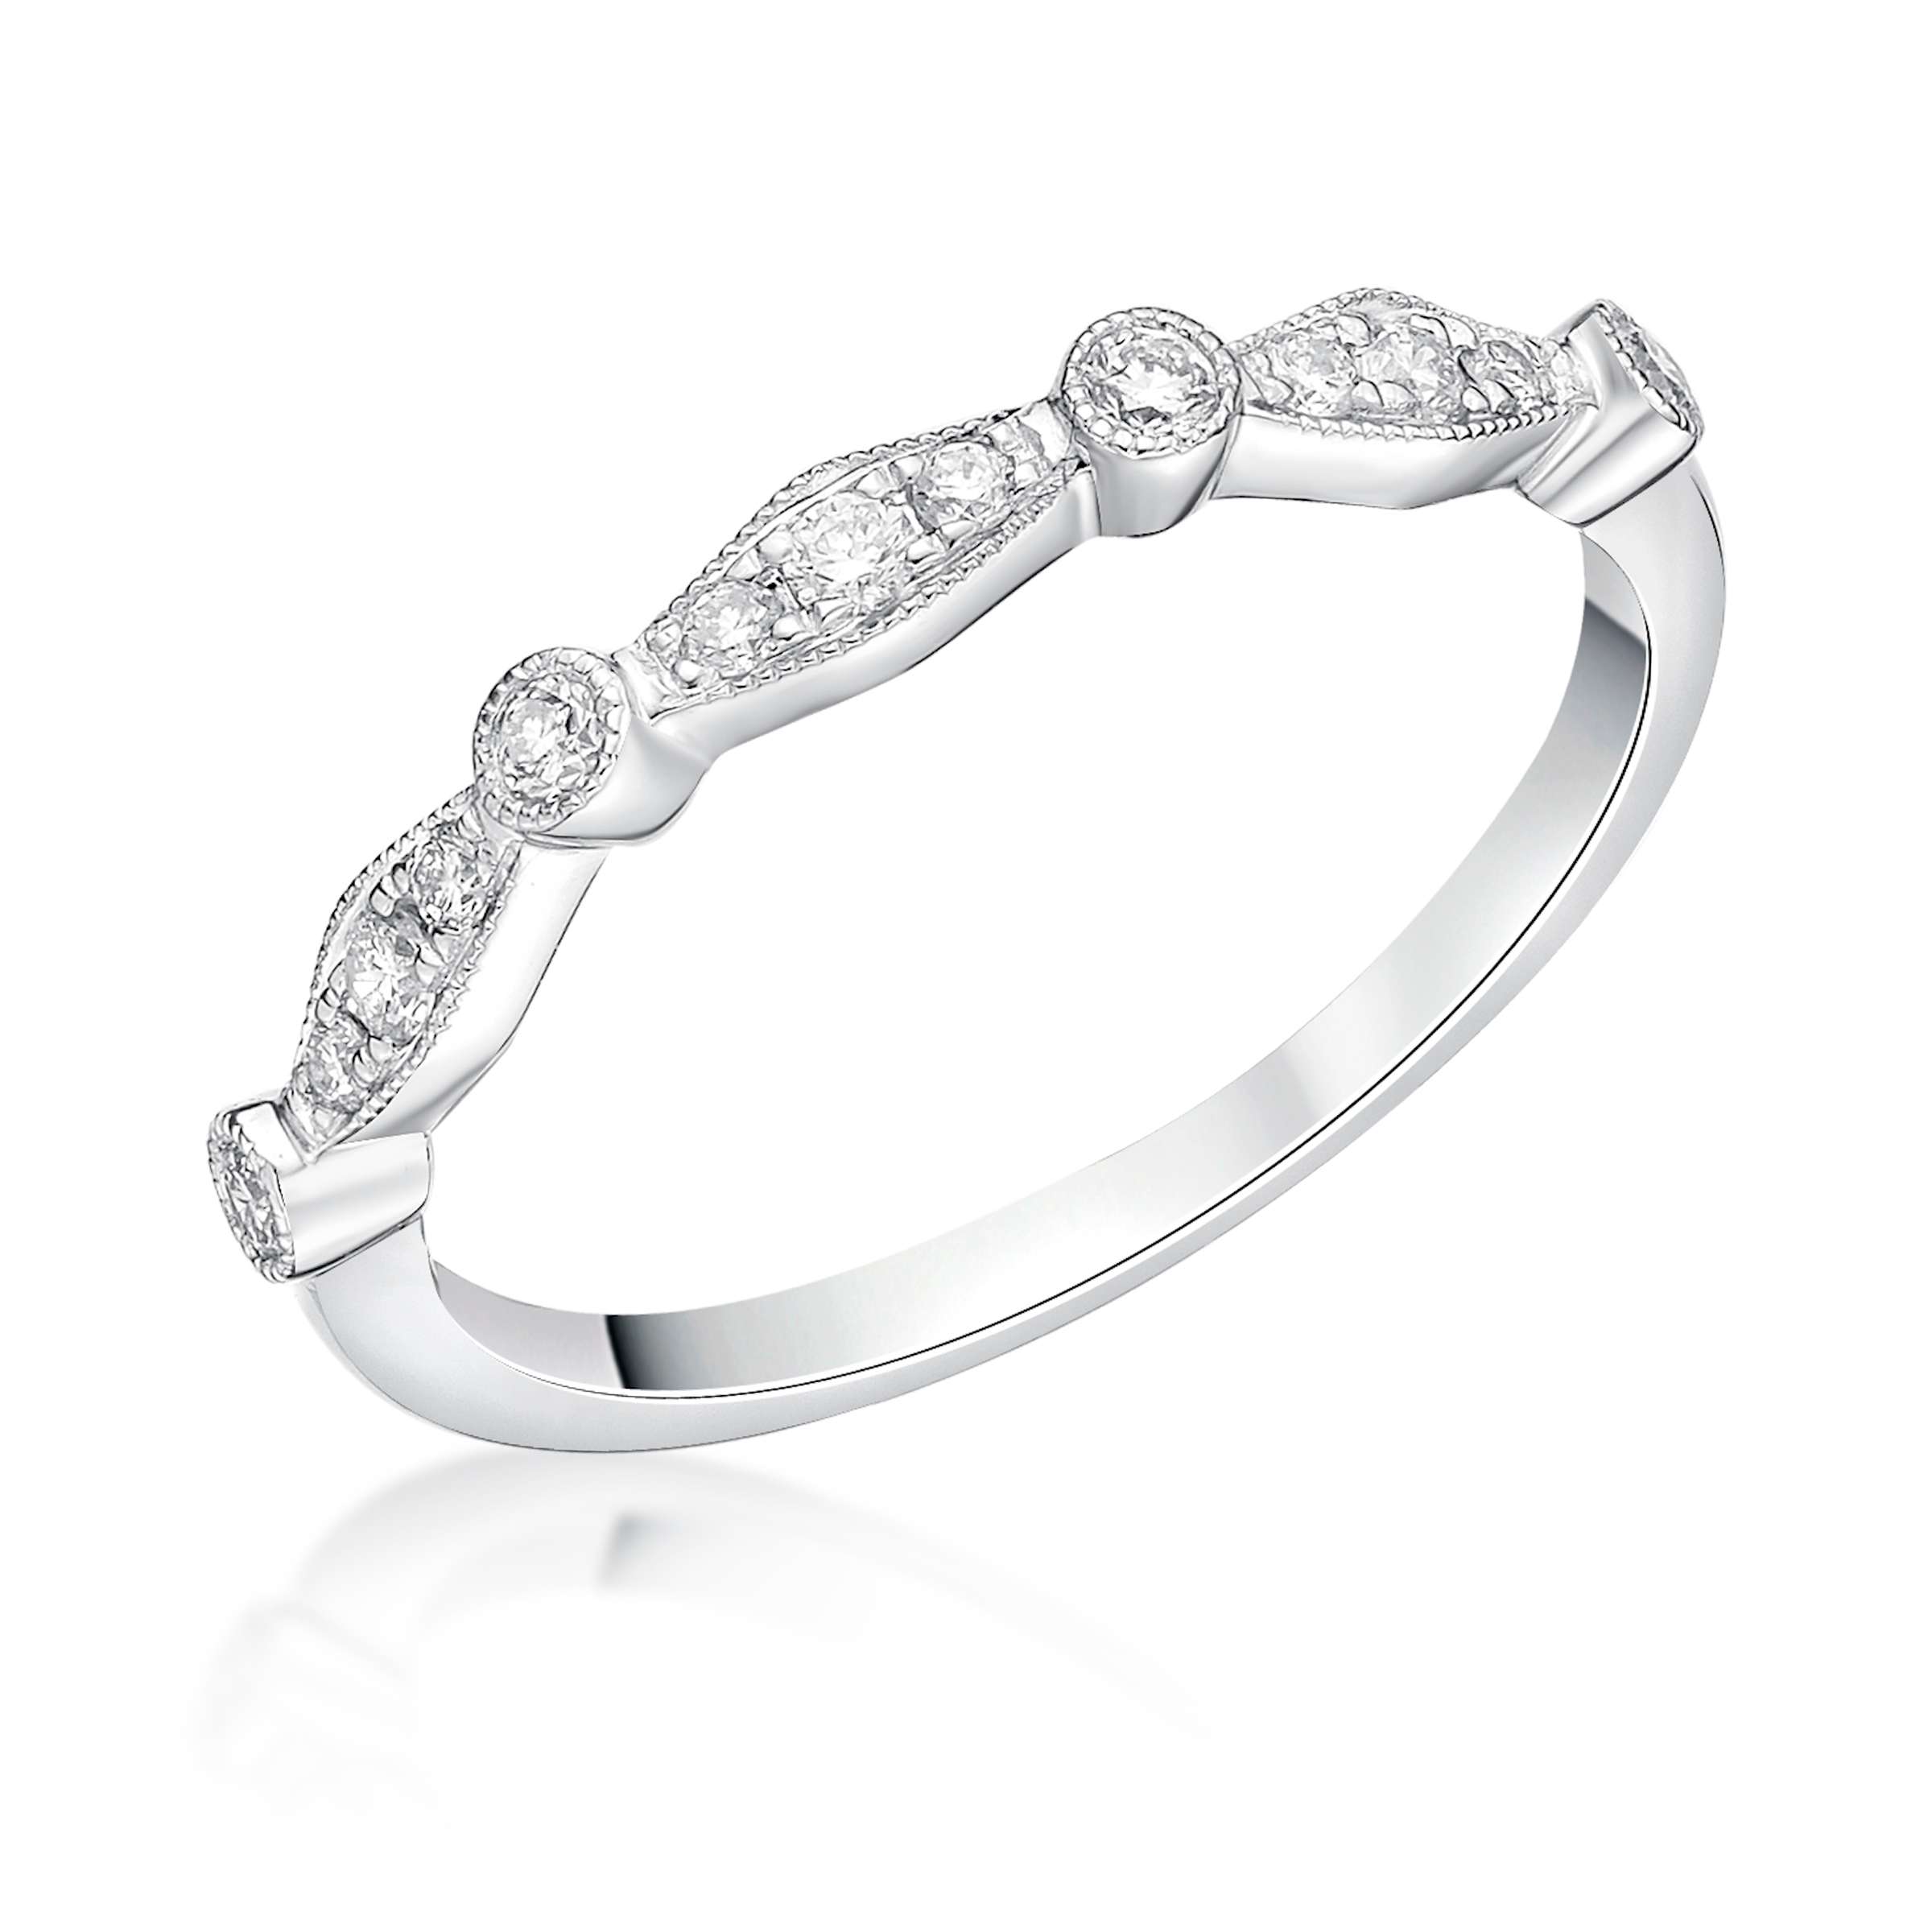 VINTAGE INSPIRED ROUND BRILLIANT CUT DIAMOND WEDDING ETERNITY RING